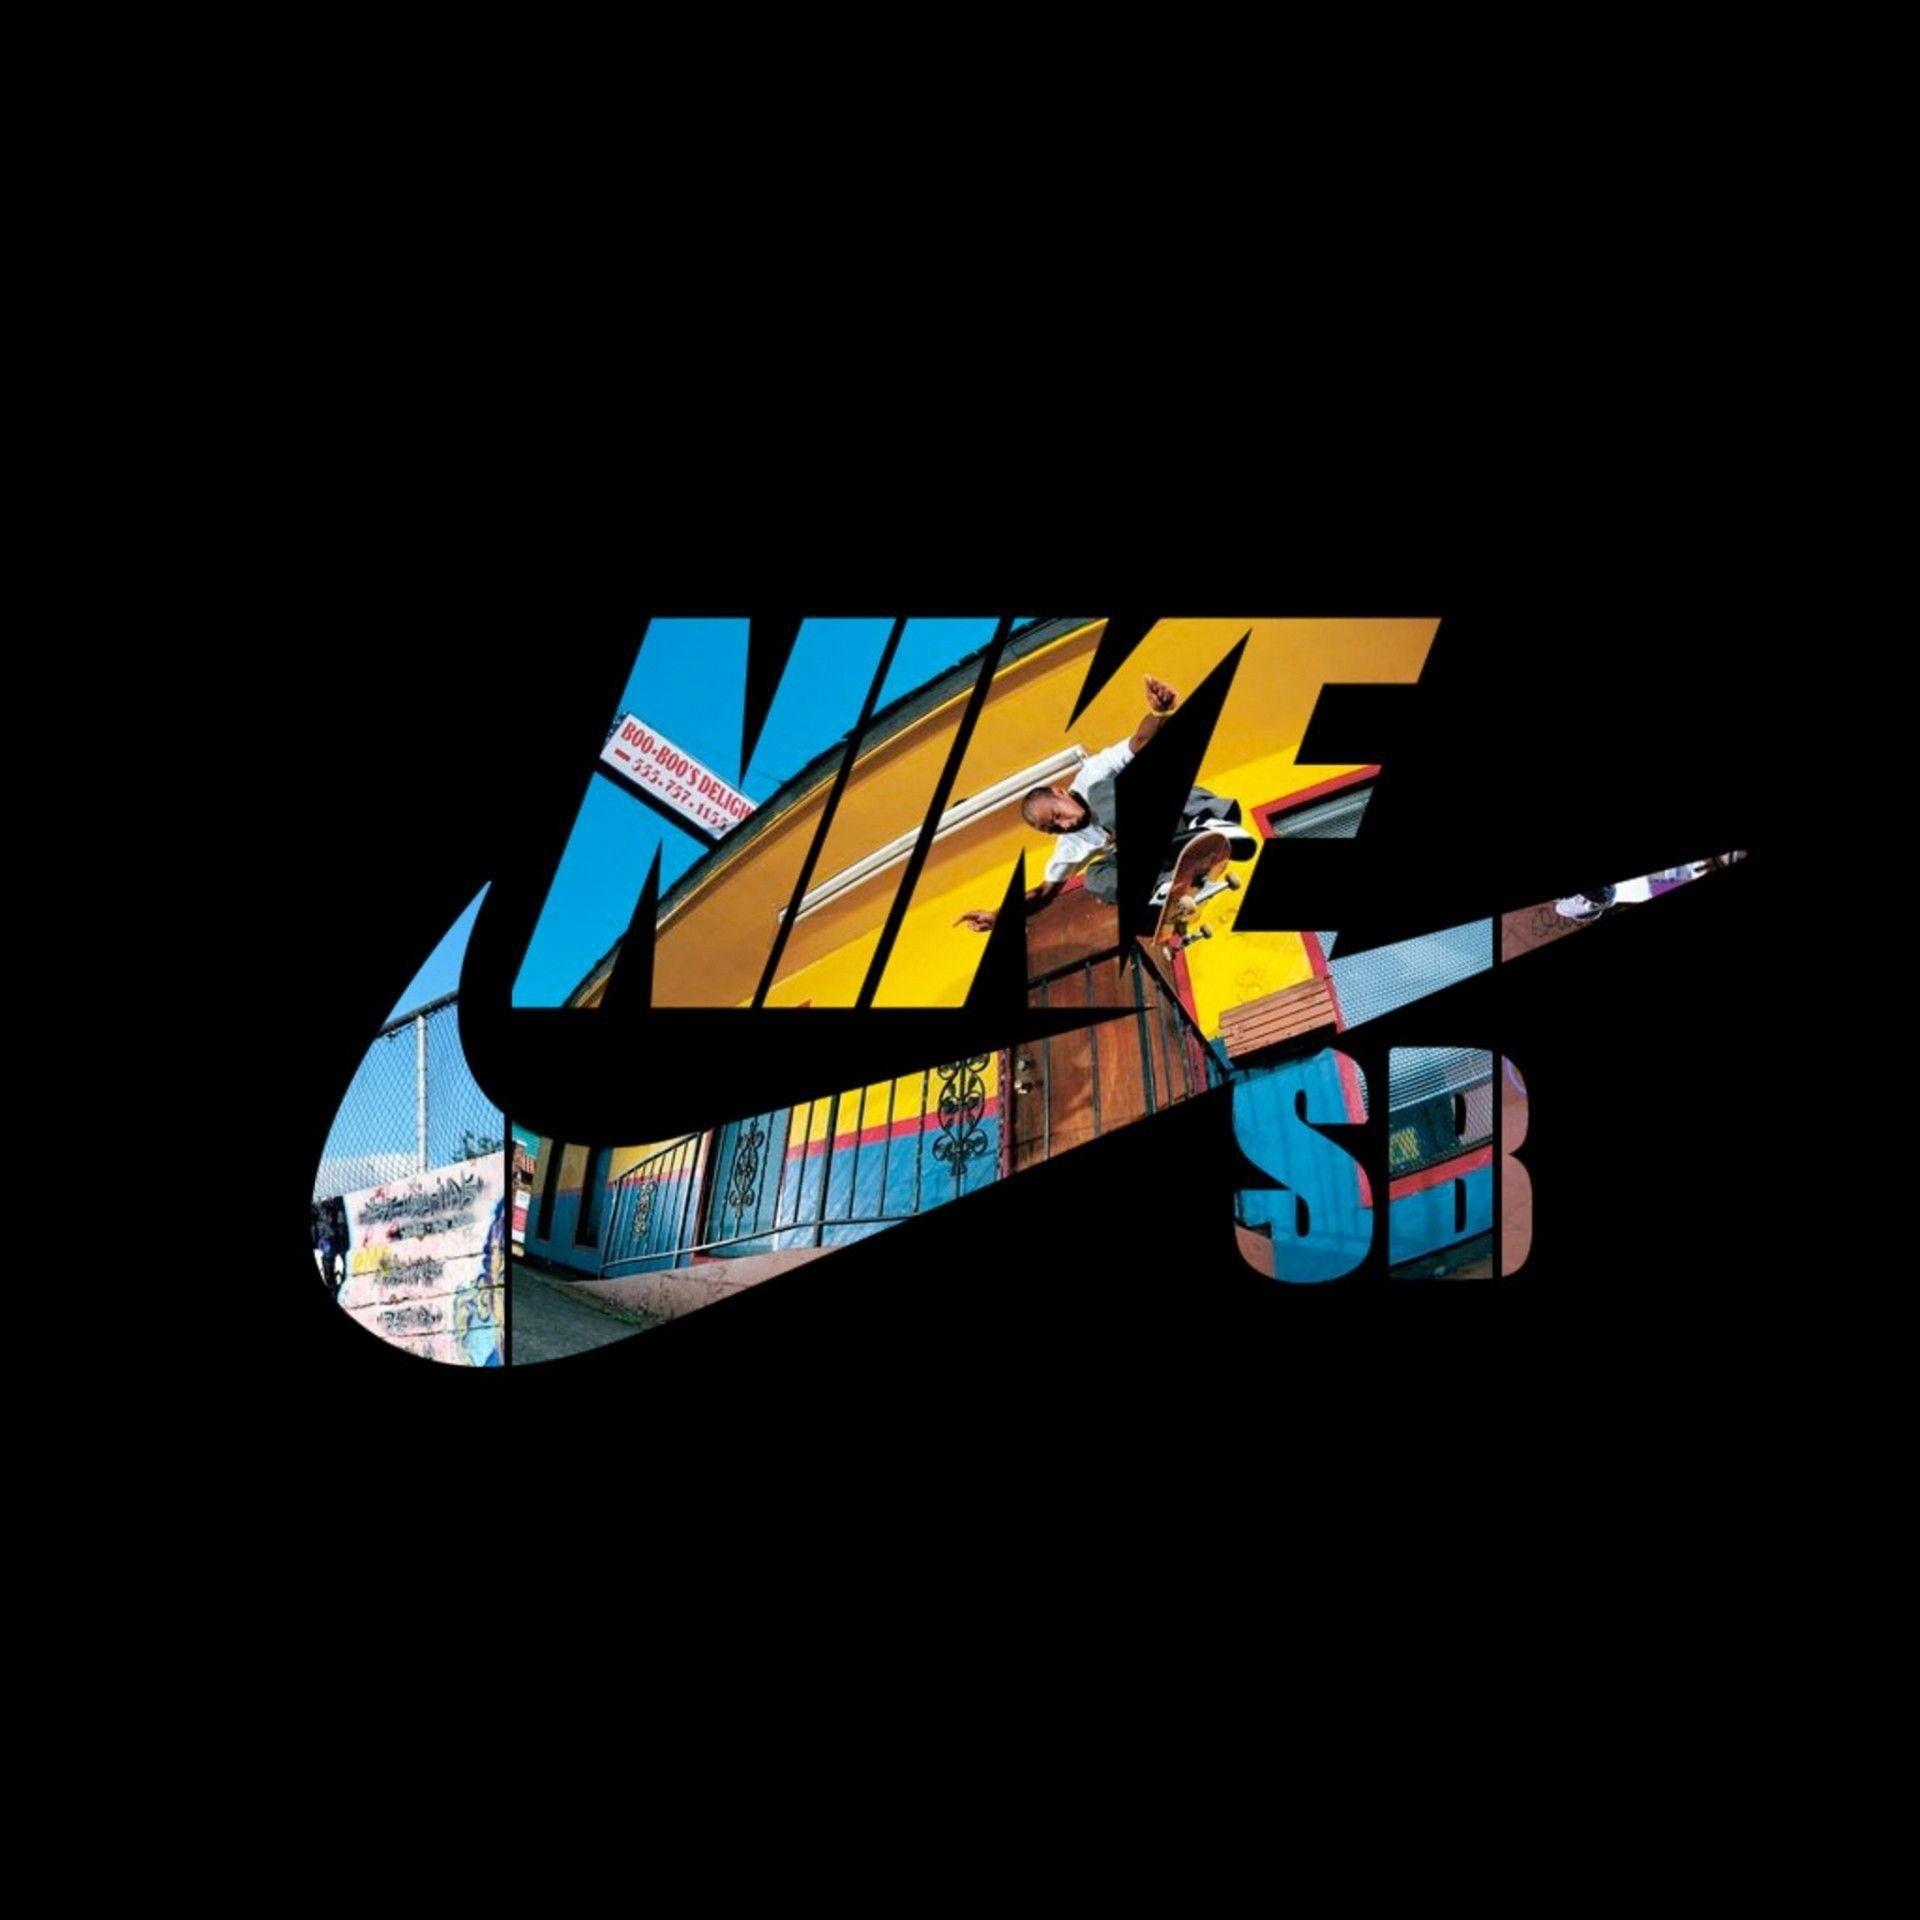 Nike Vs Adidas Galaxy Wallpapers